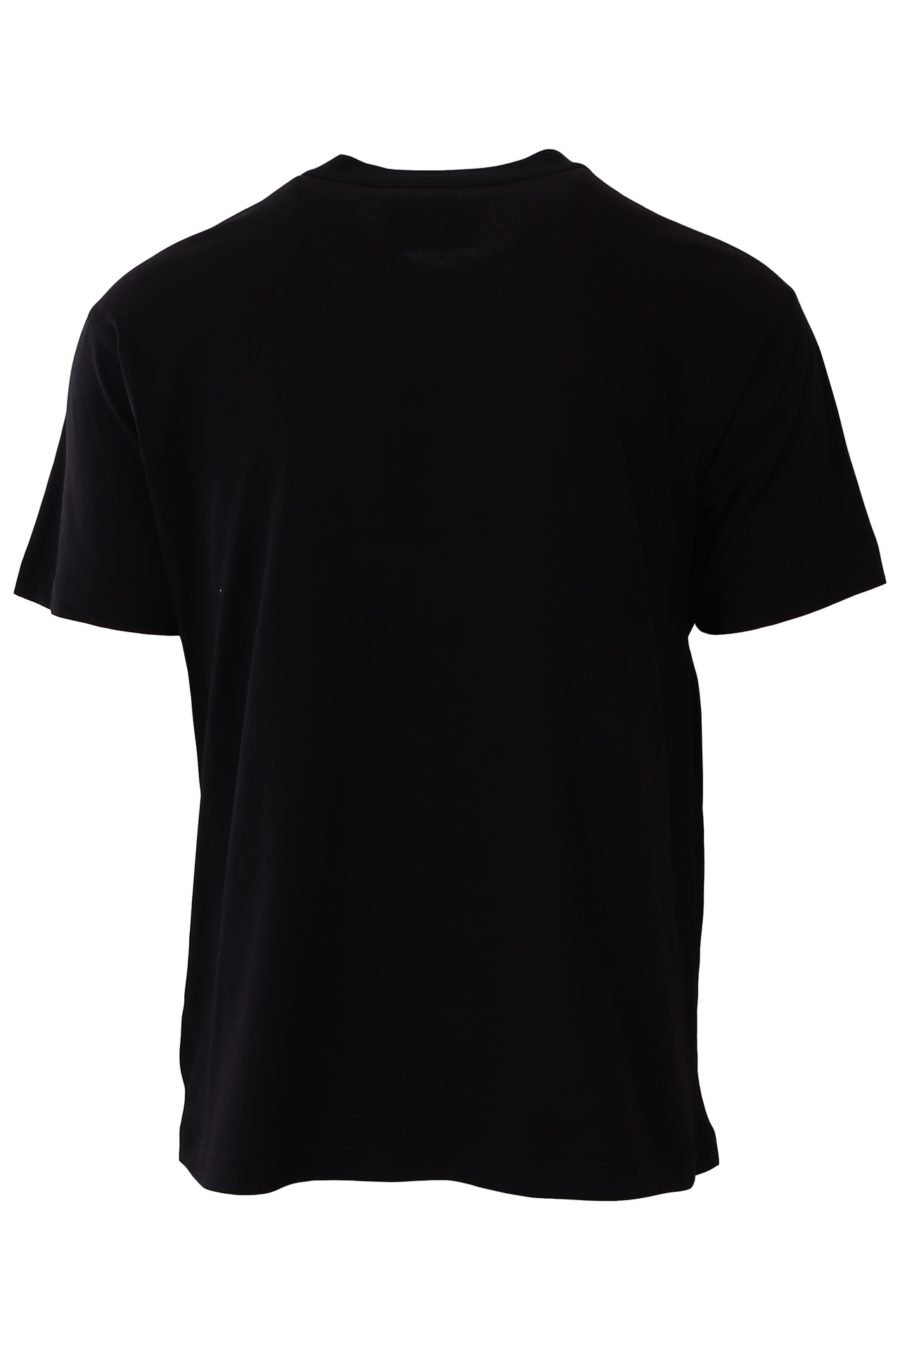 T-shirt Versace Jeans Couture black rock - d5800dc501743fd9b33be5b58b6f0403be843aa2